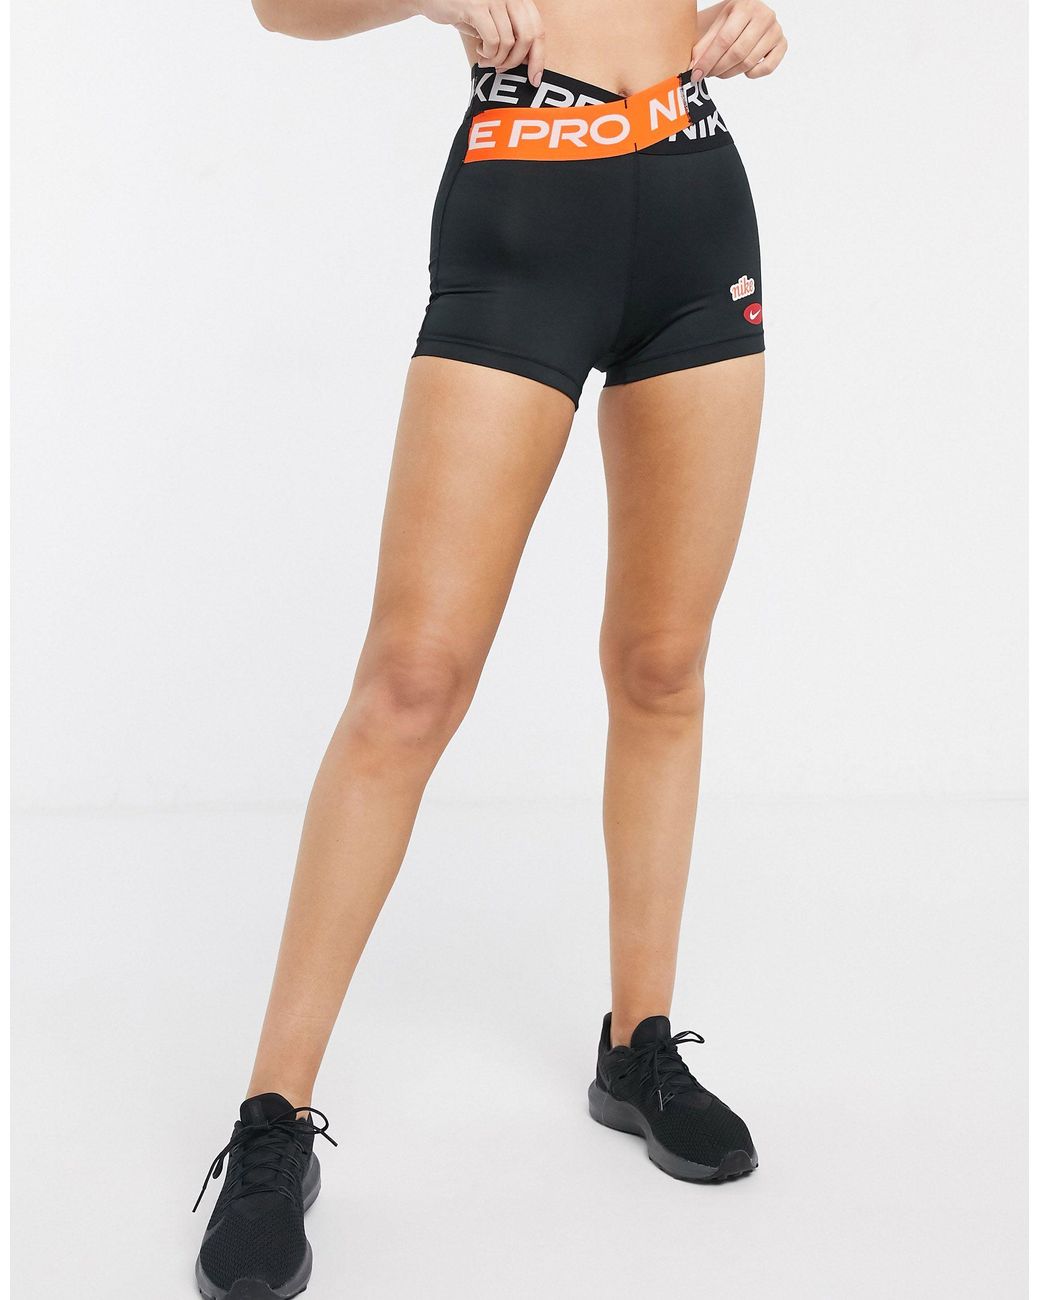 Nike Icon Clash Pro 3 Inch Shorts in Black | Lyst